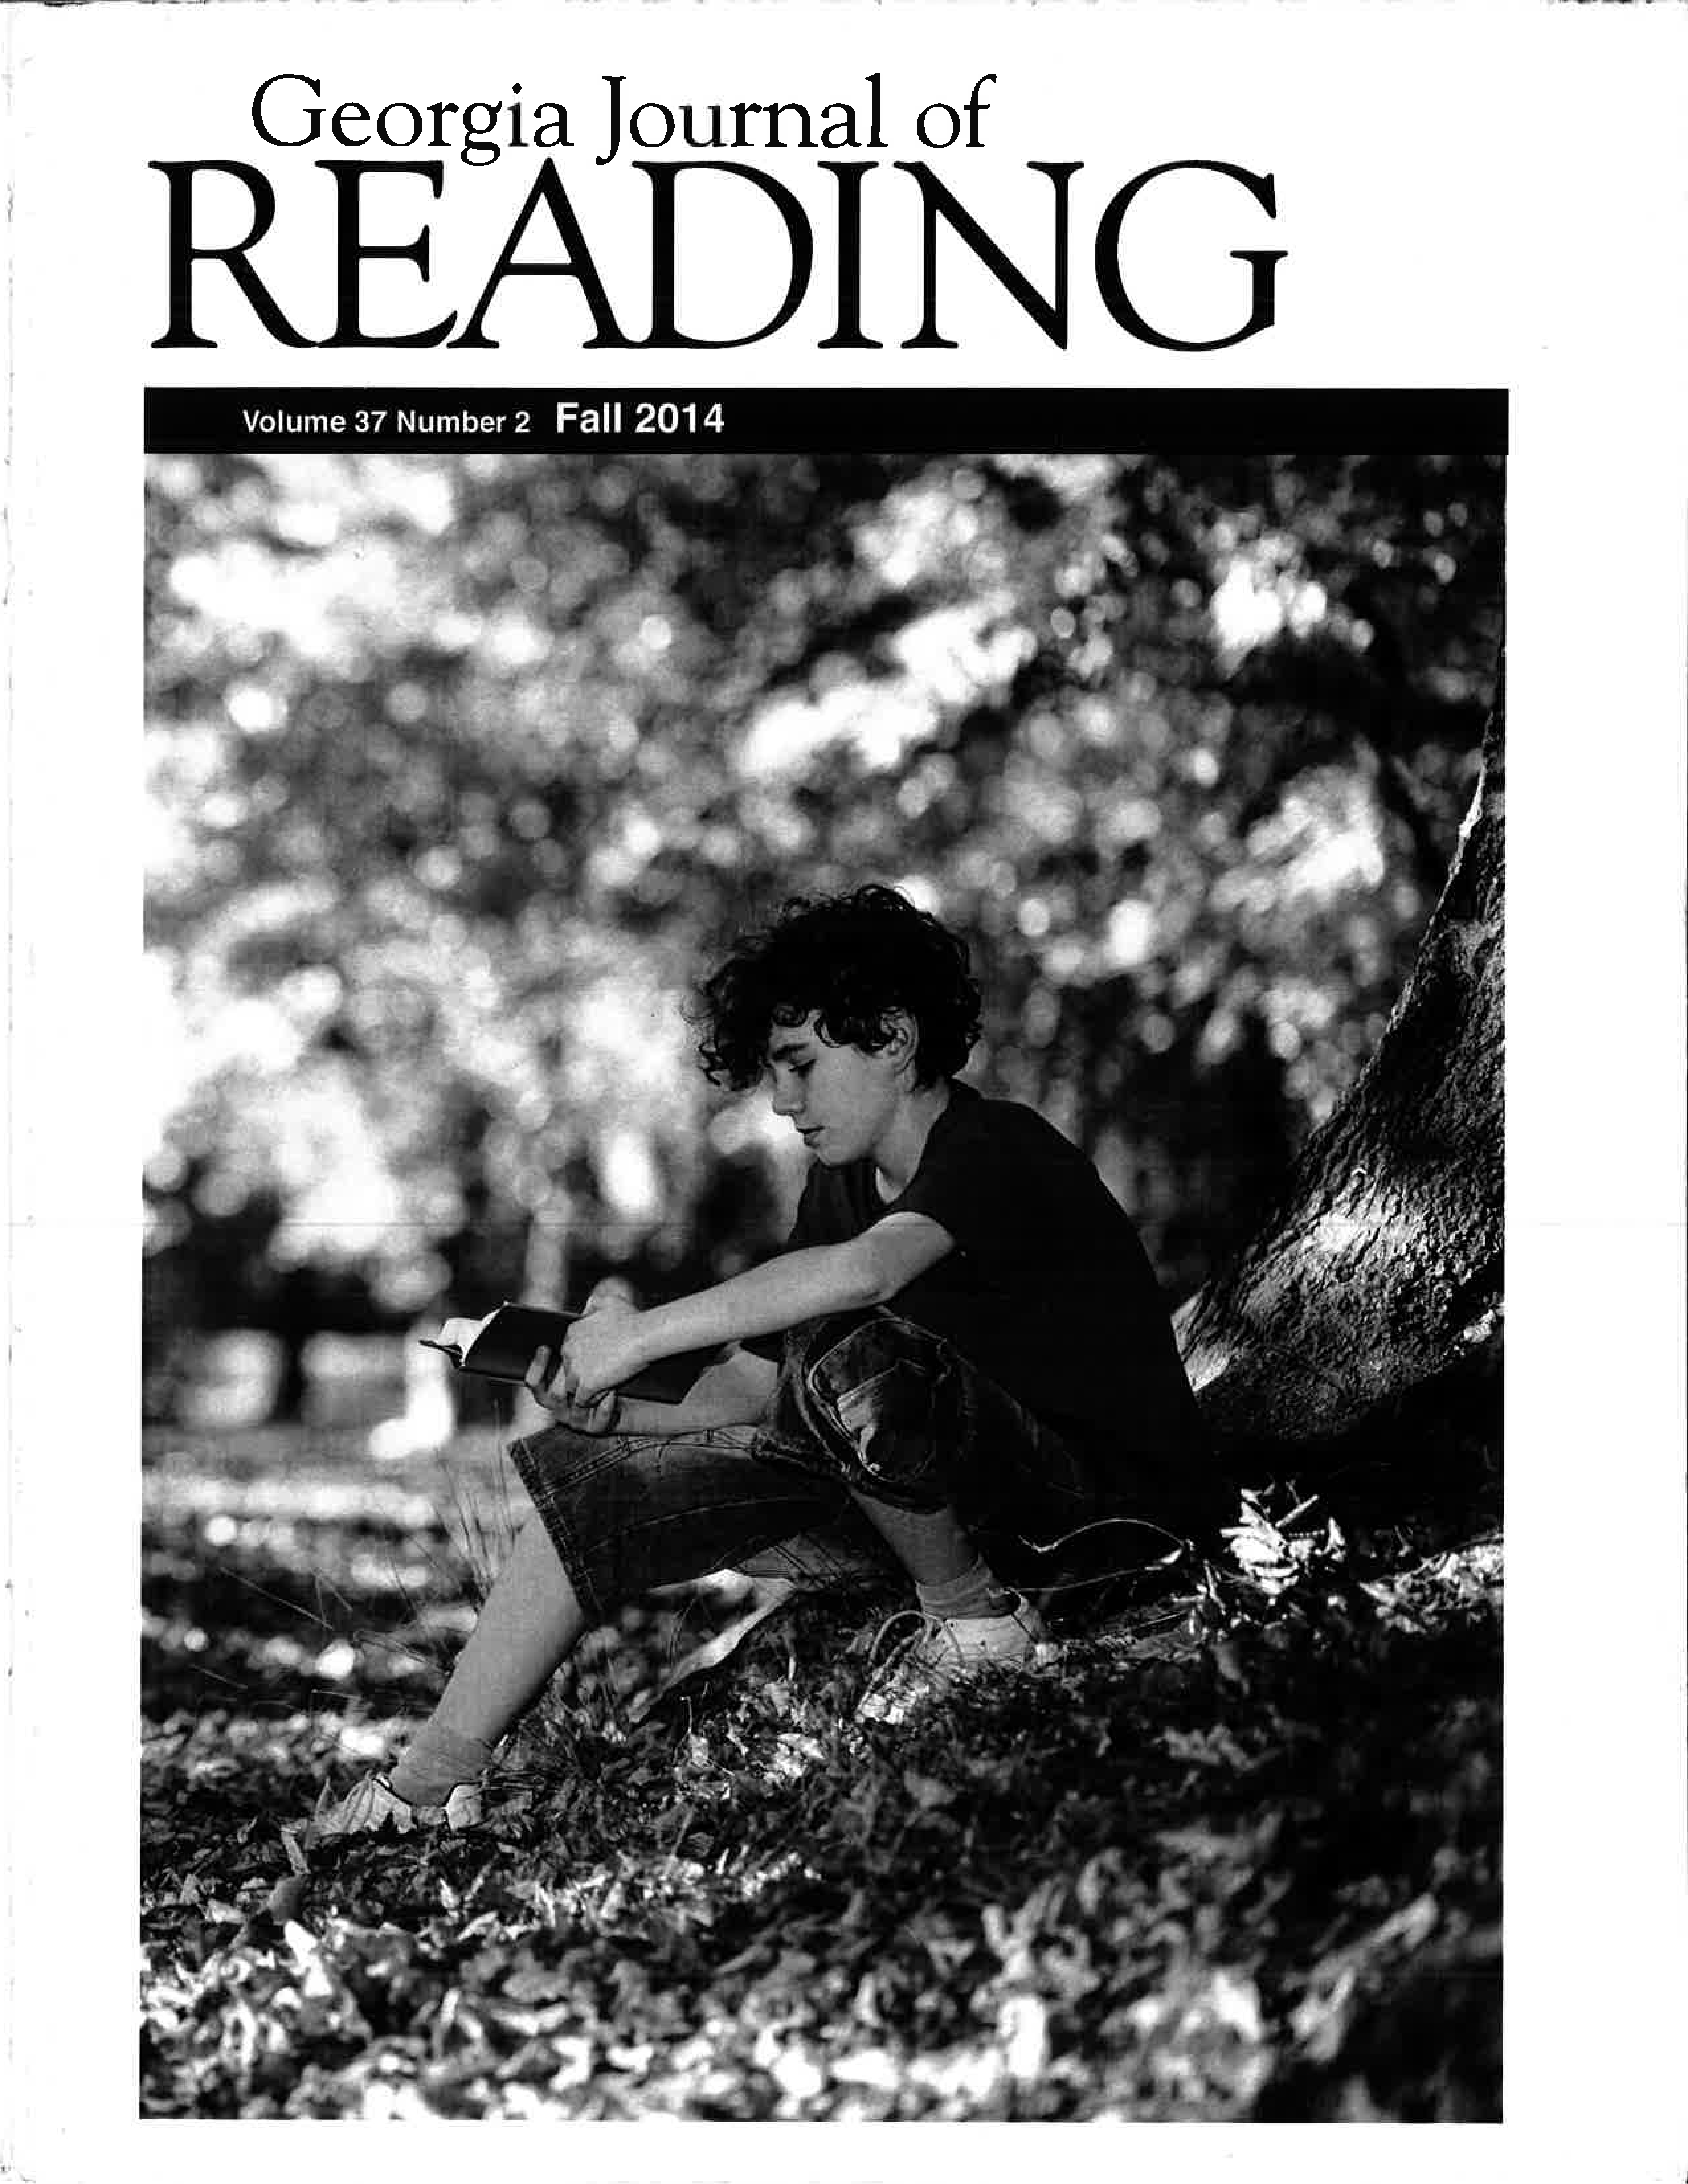 Georgia Journal of Reading (Fall 2014)